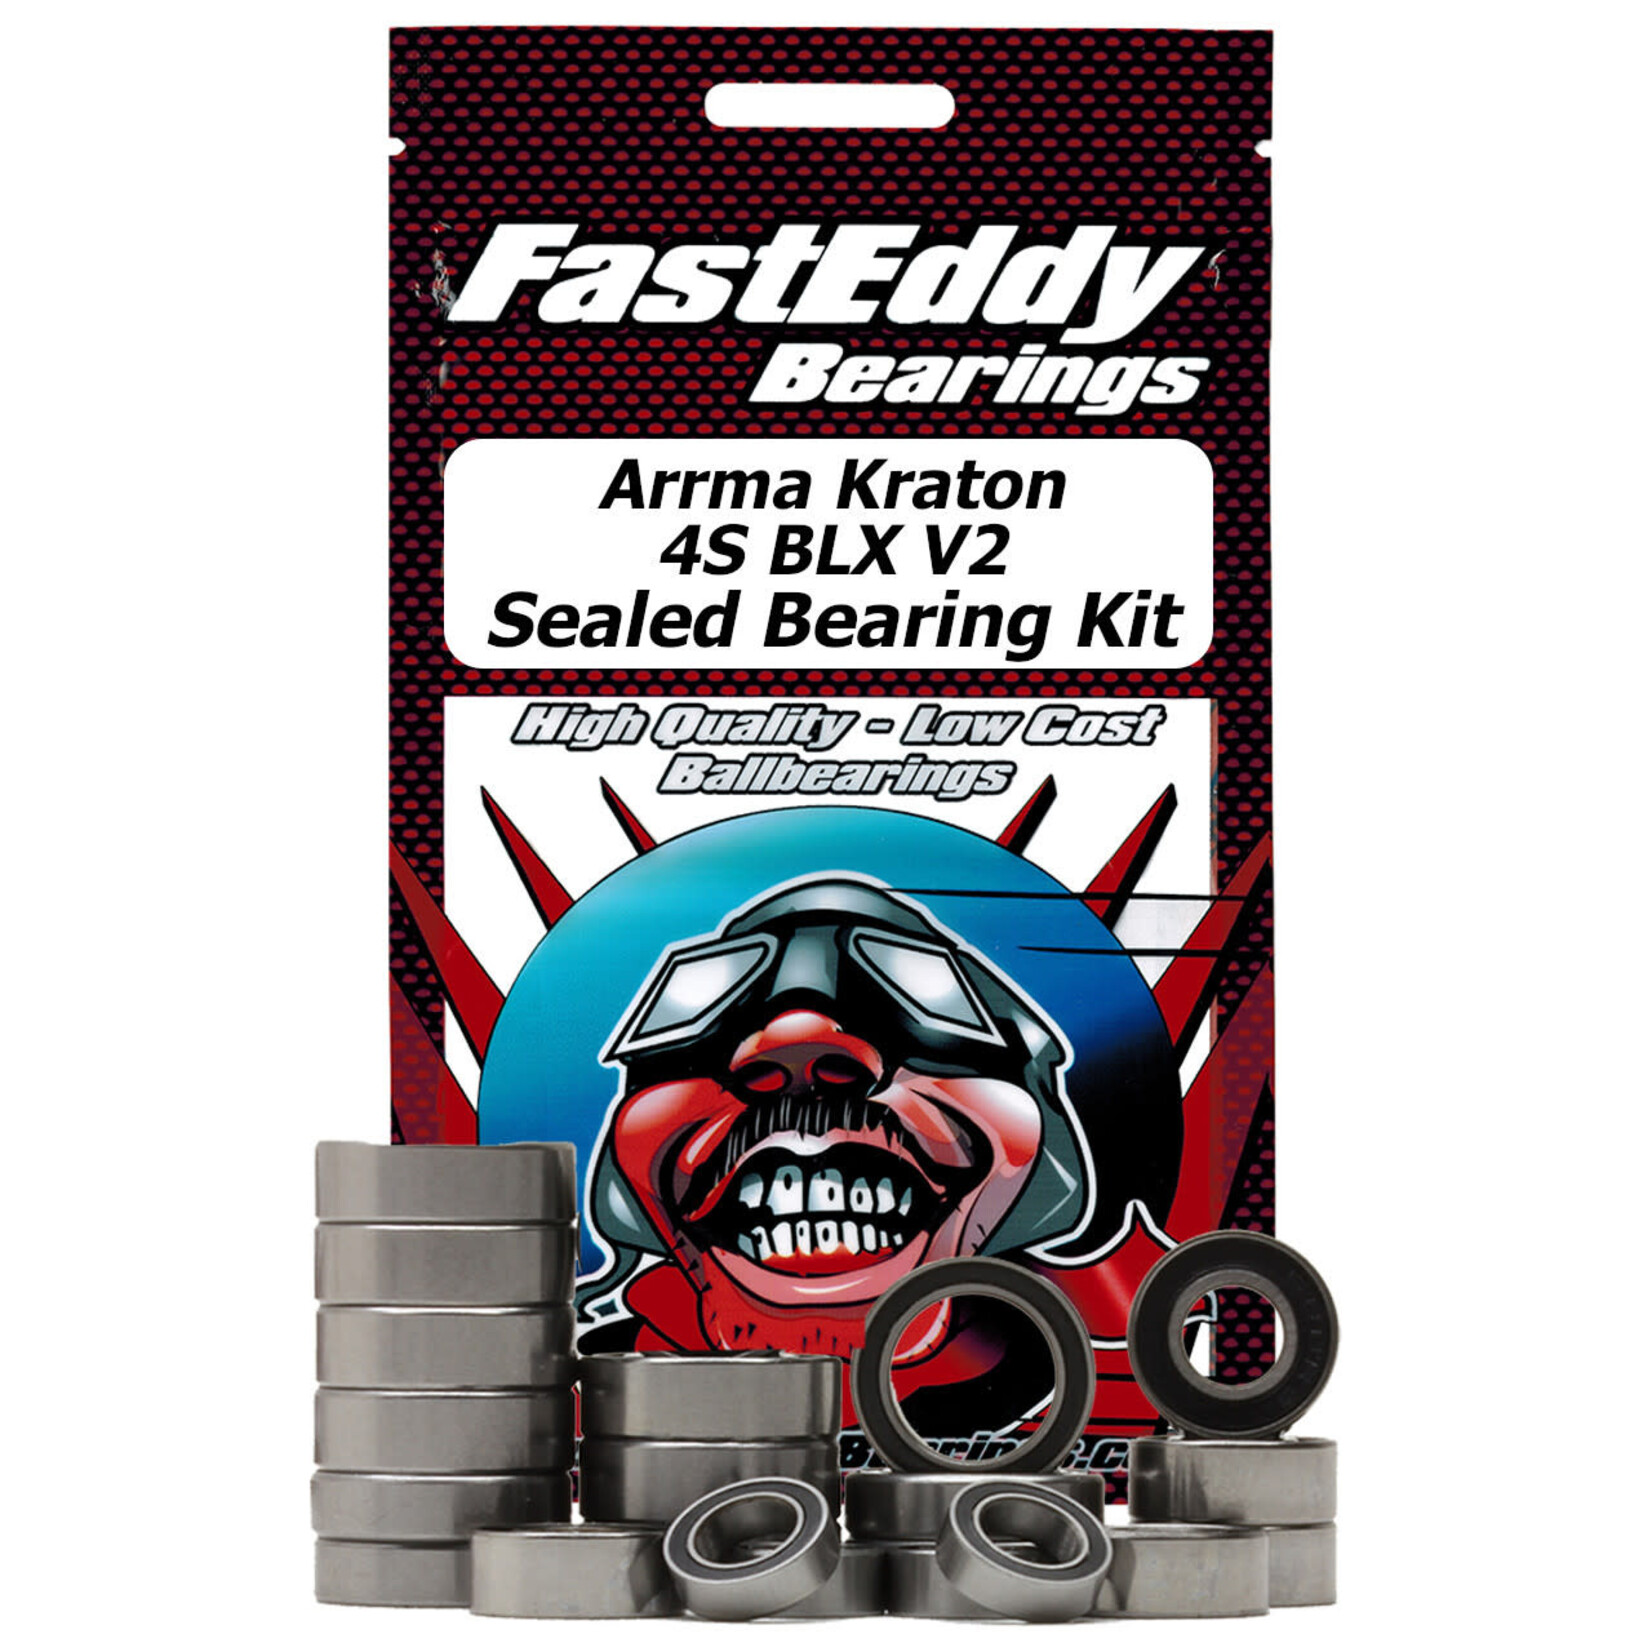 FastEddy FastEddy Bearings Arrma Kraton 4S BLX V2 Sealed Bearing Kit #TFE7847